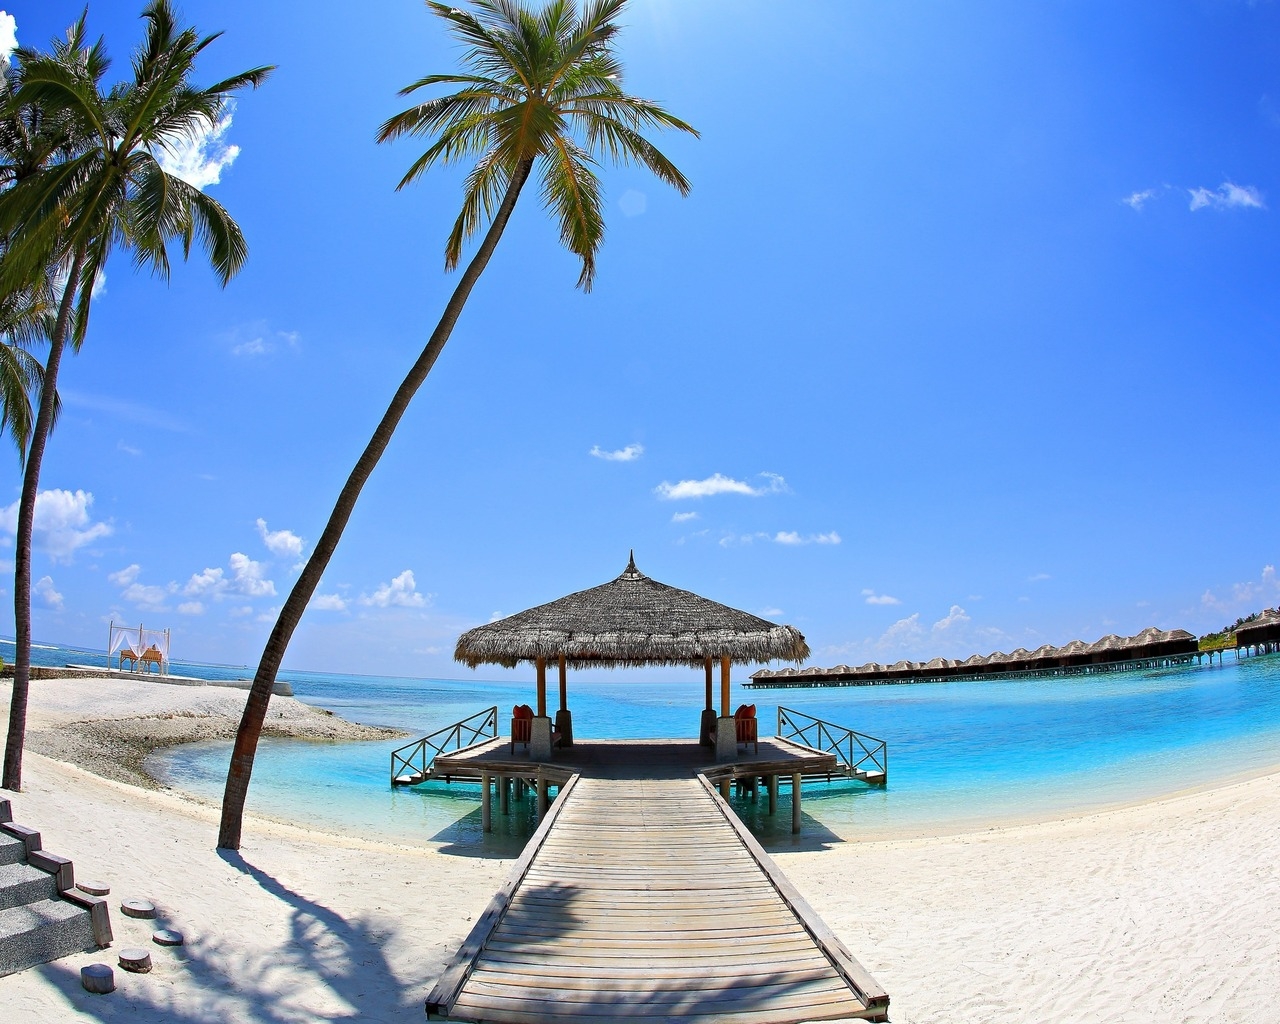 Sunny Palm Beach Corner  for 1280 x 1024 resolution